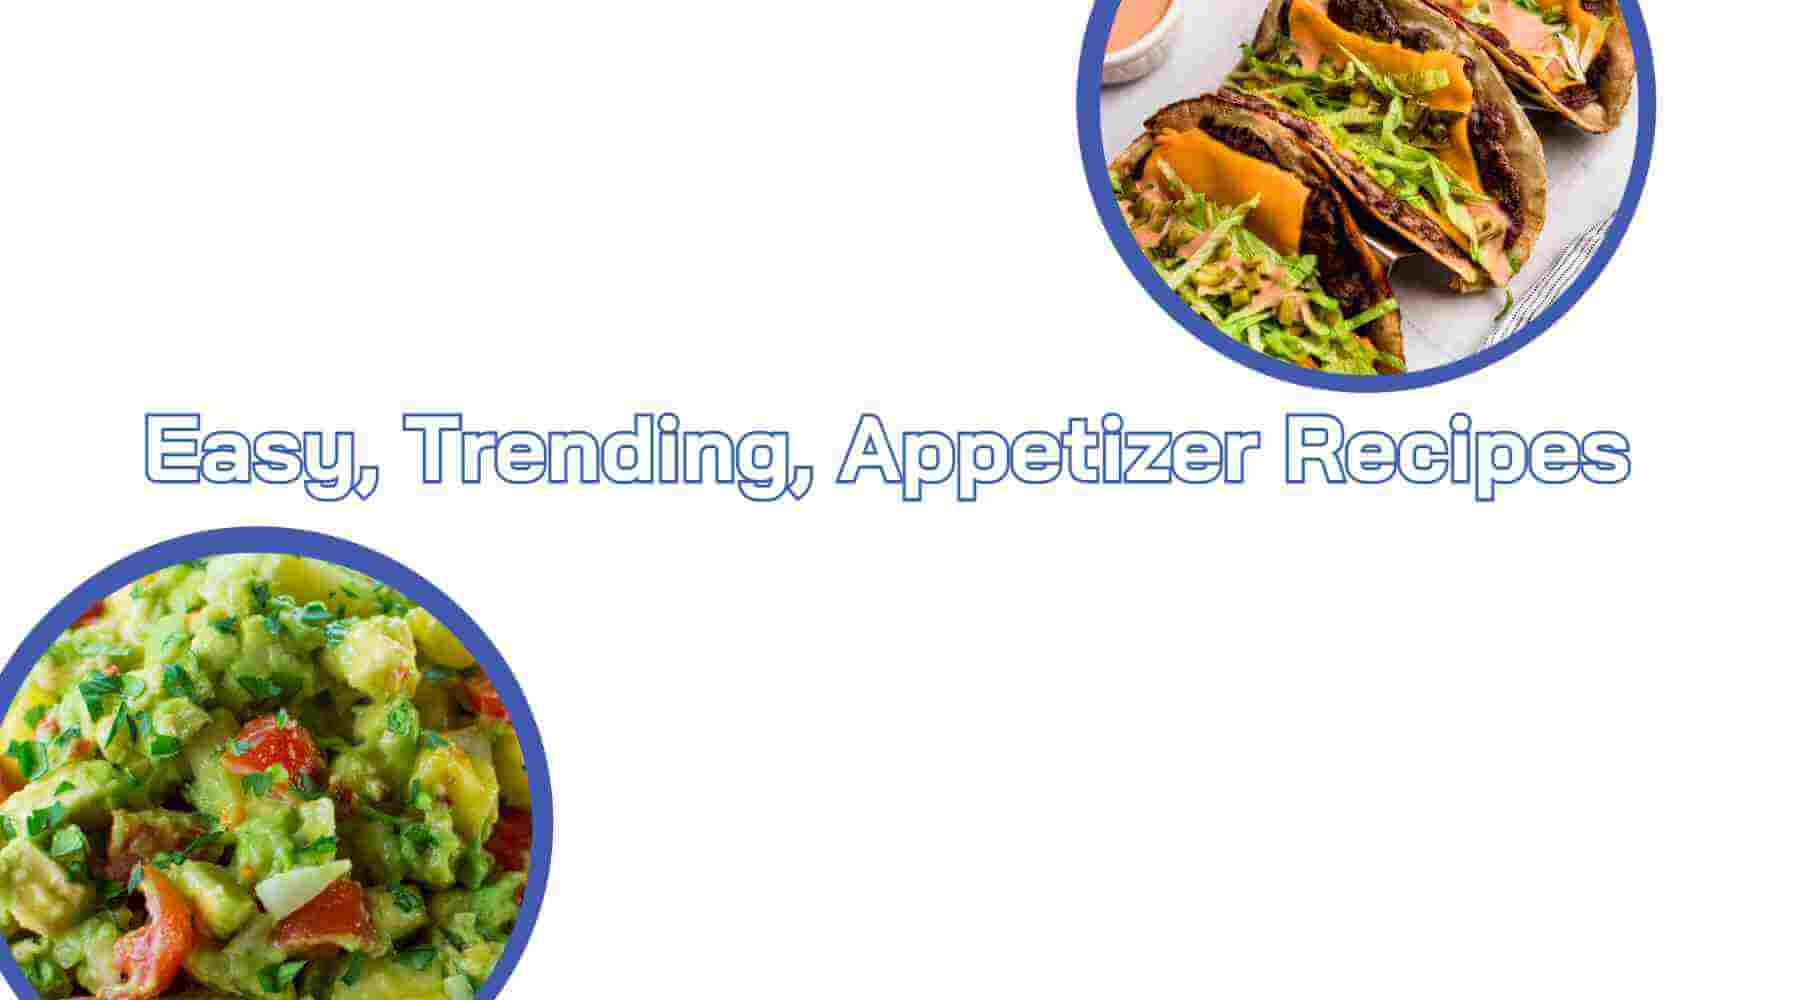 Easy, Trending, Appetizer Recipes - Views Balcony Bar | Turn your Balcony into a Bar!